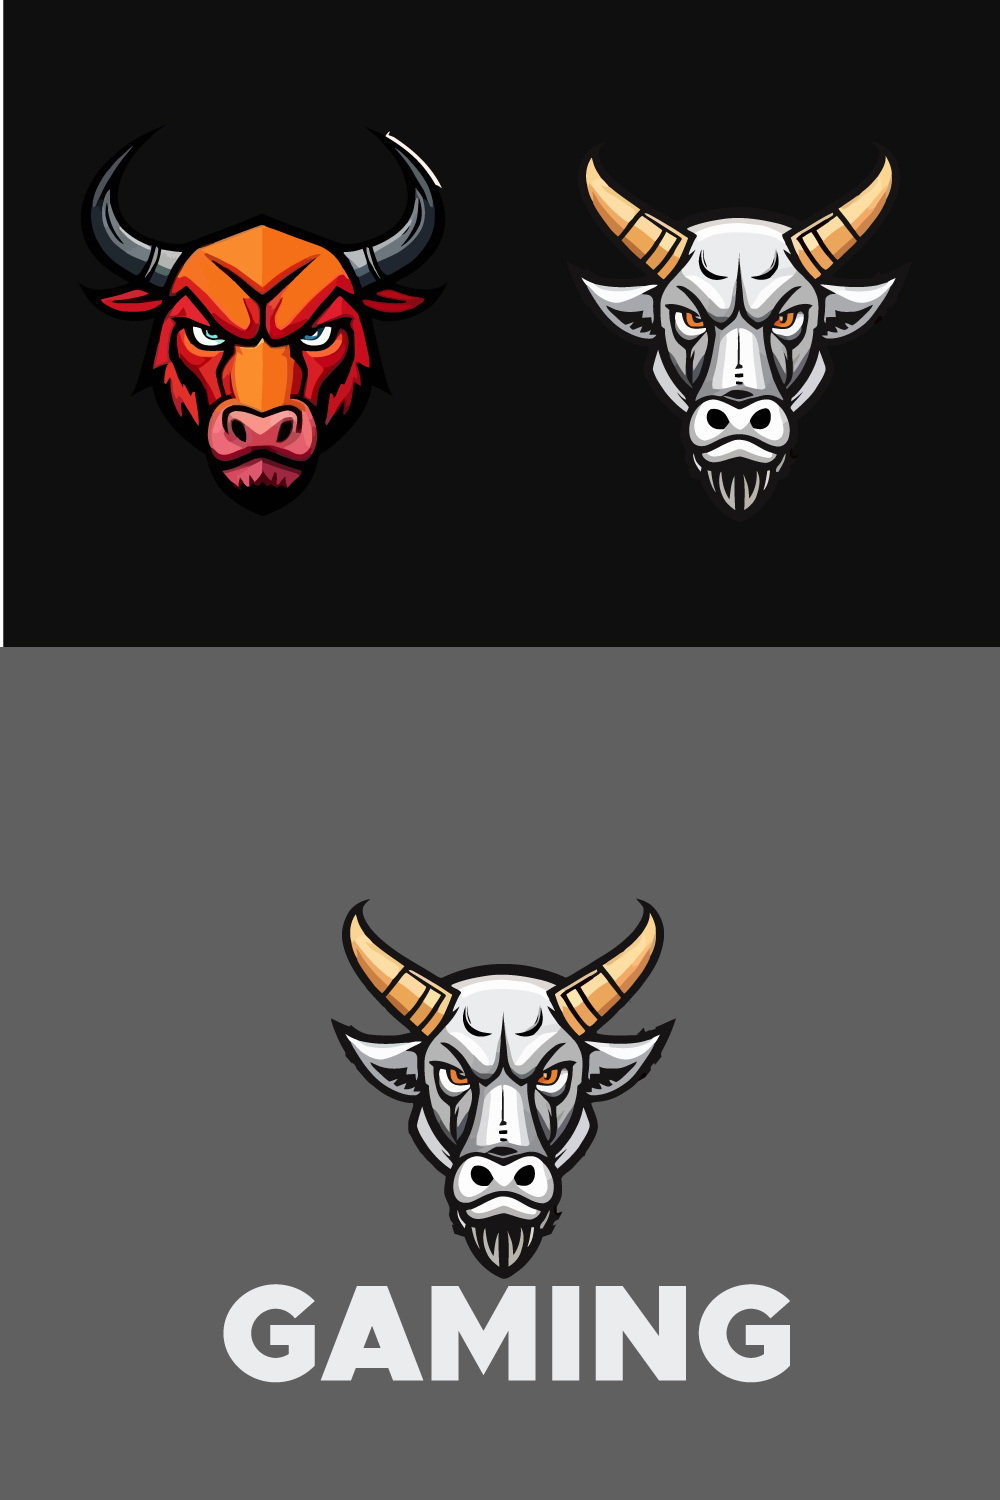 2 bull gaming mascot logos pinterest preview image.